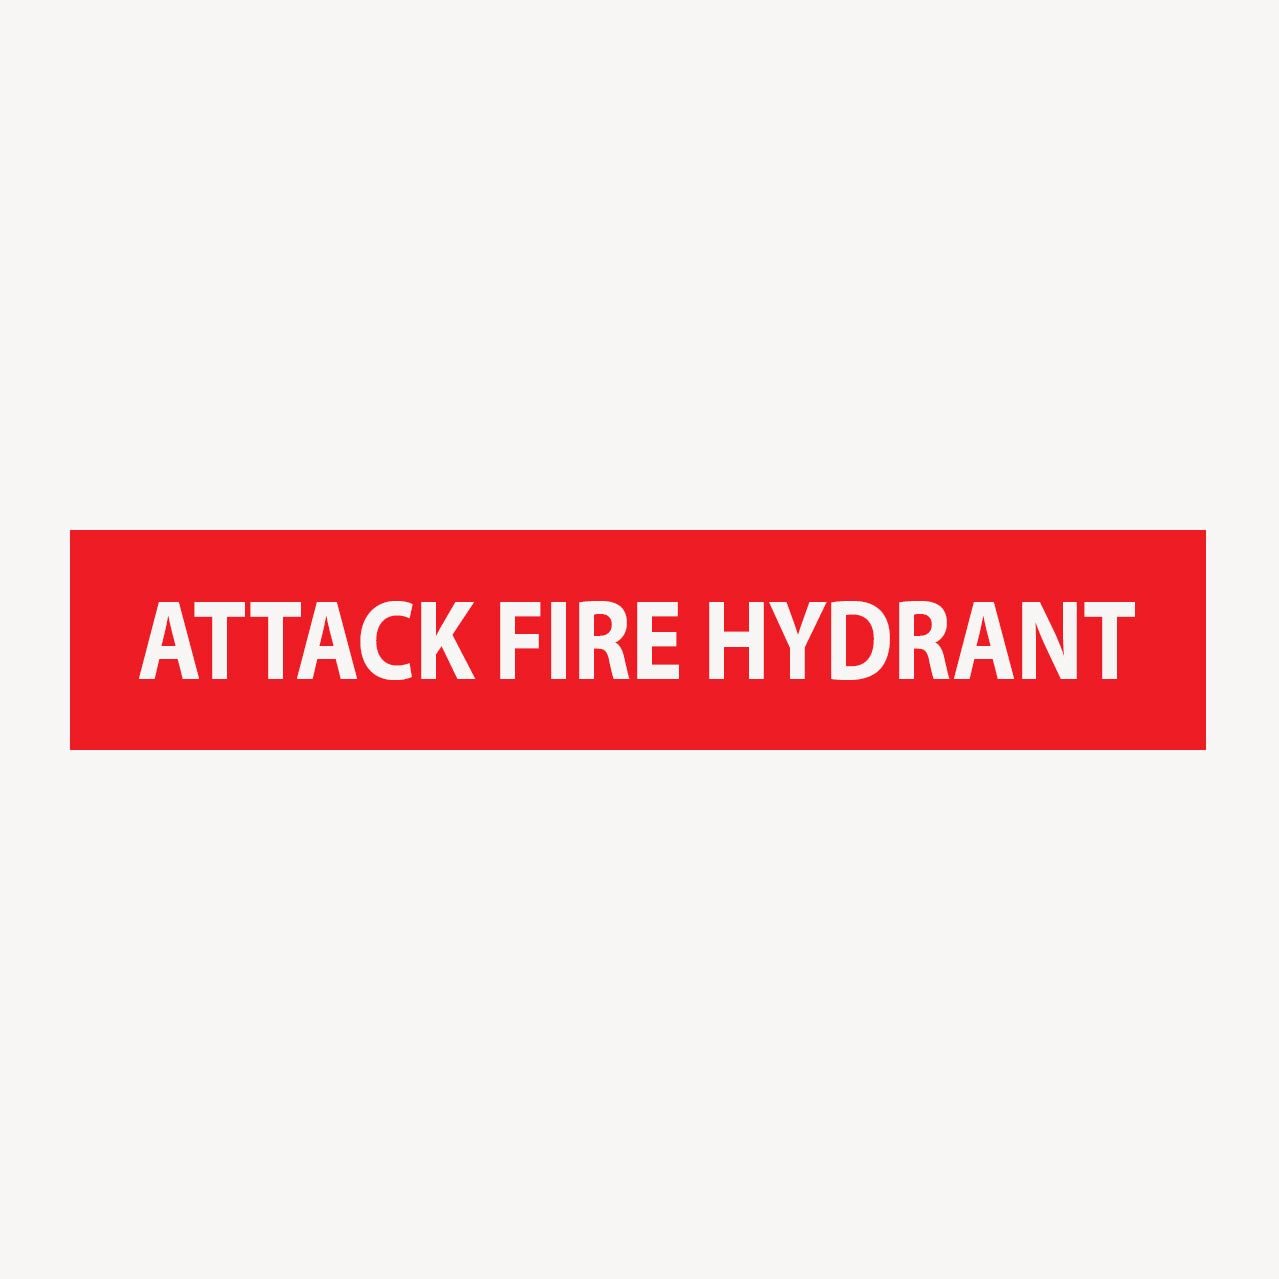 ATTACK FIRE HYDRANT SIGN